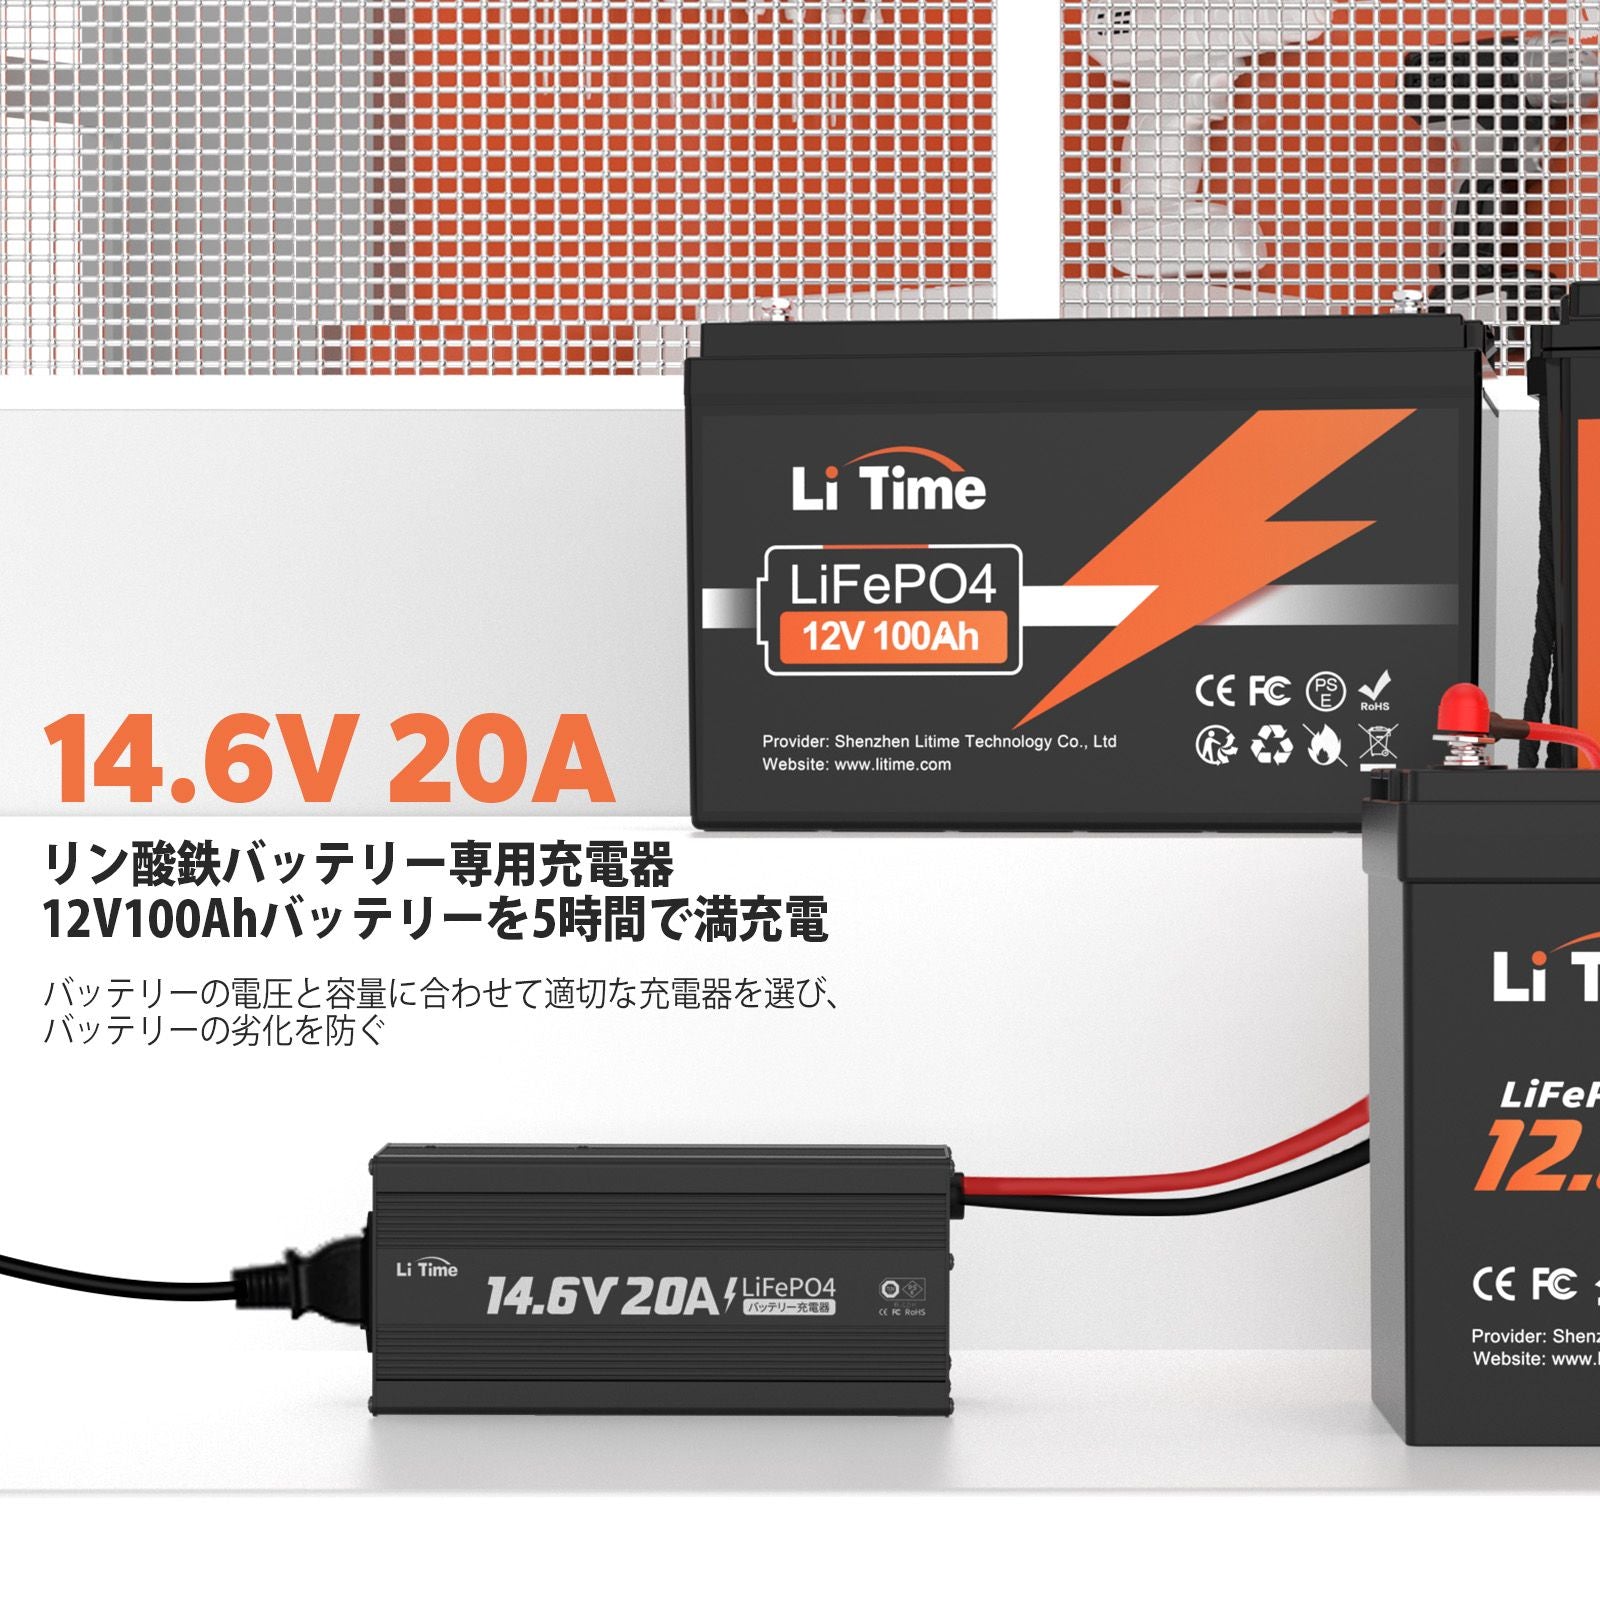 LiTime 14.6V 20A リン酸鉄リチウムバッテリー専用・速い充電器   12Vバッテリー適用